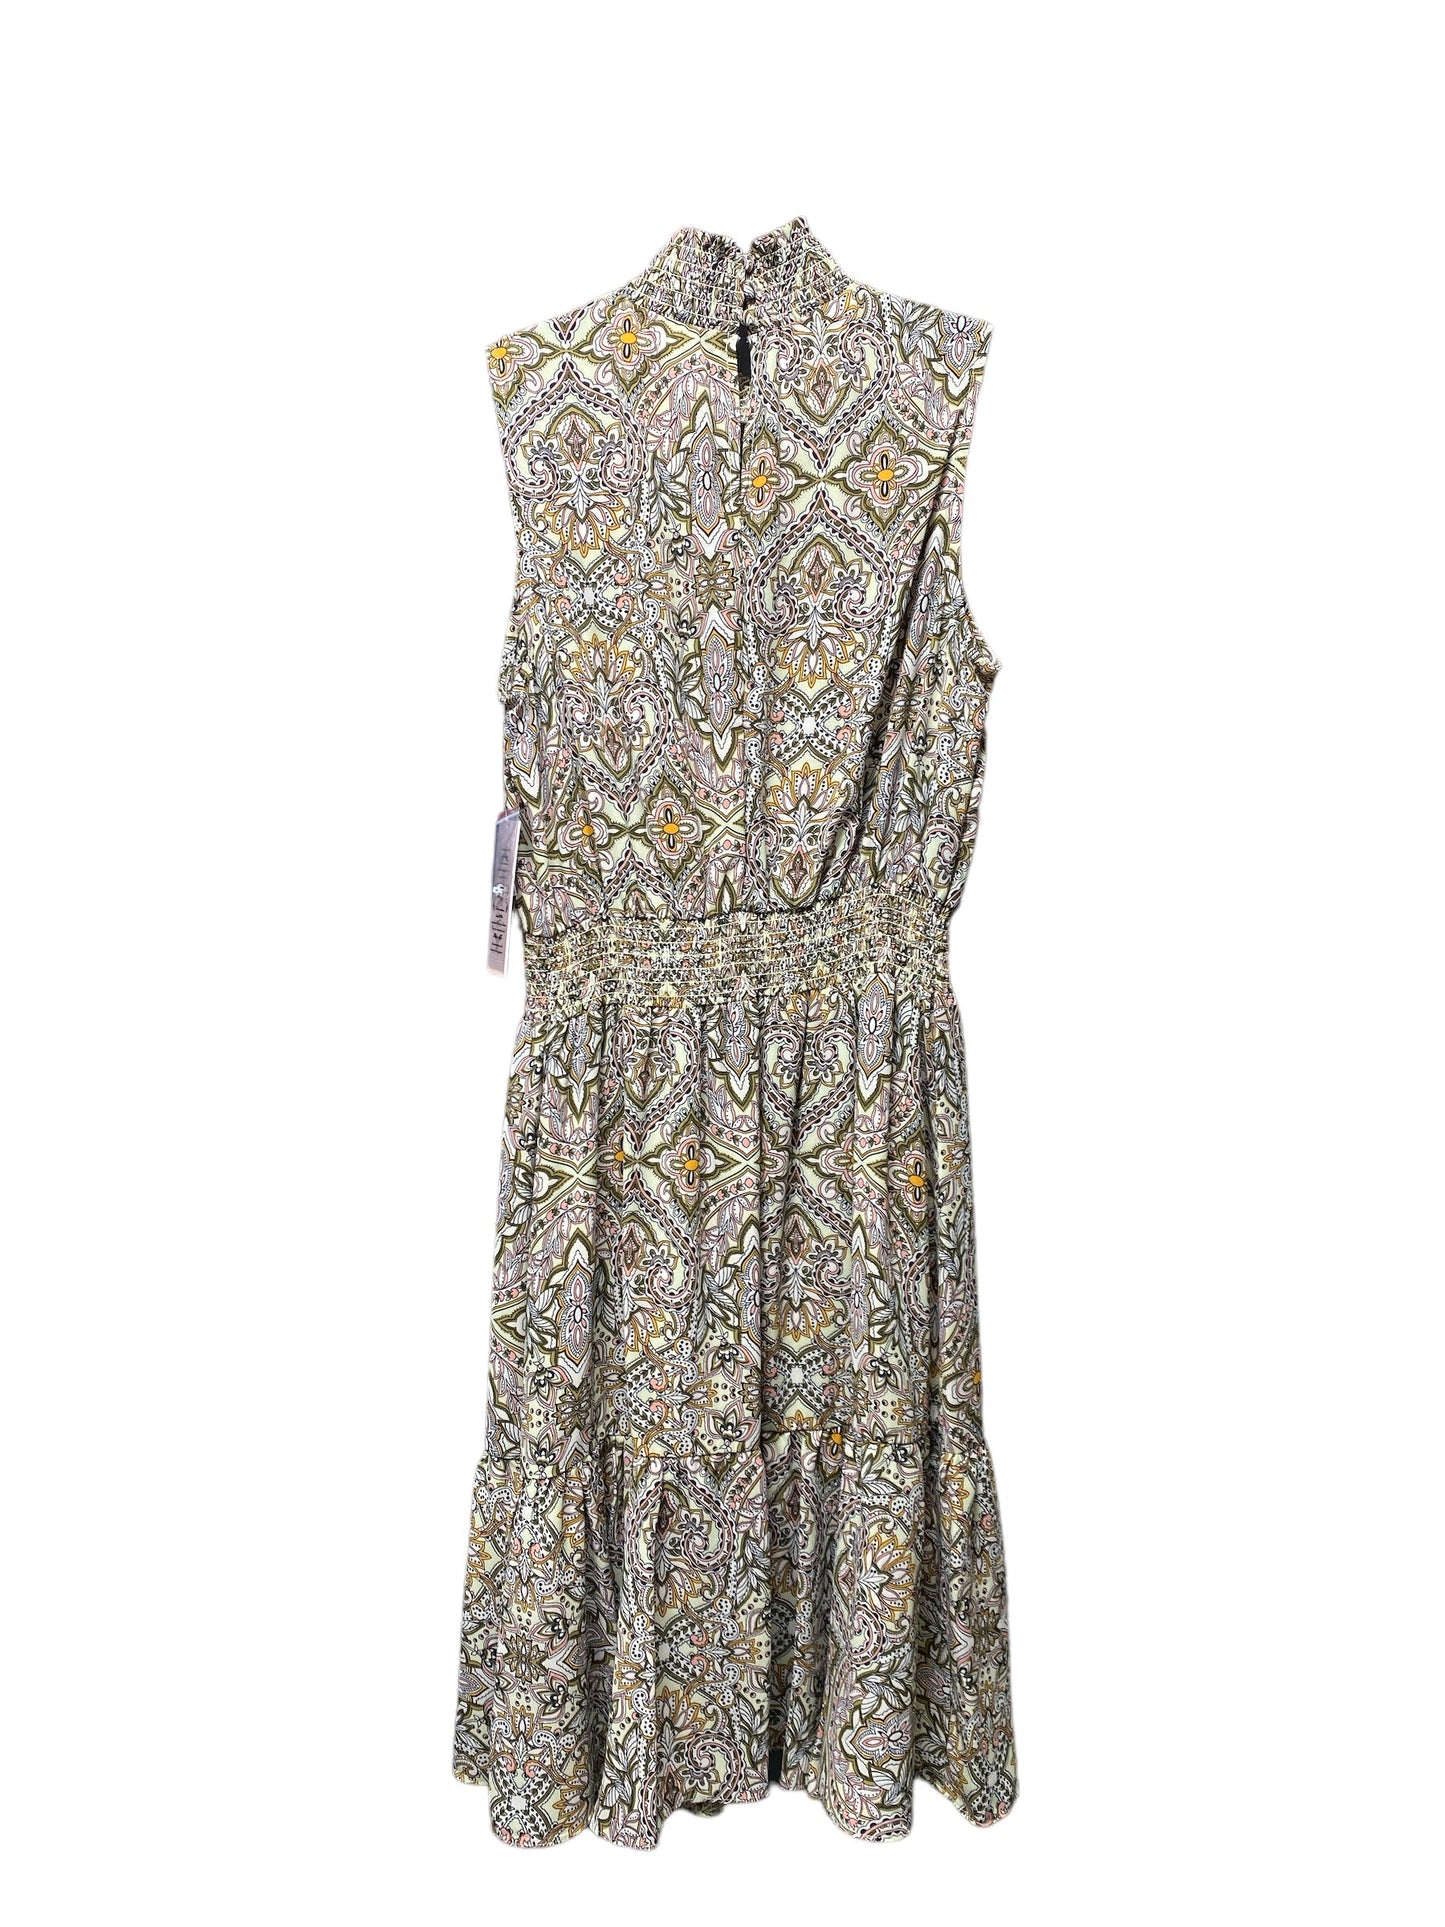 Paisley Print Dress Casual Short Nanette By Nanette Lepore, Size 6